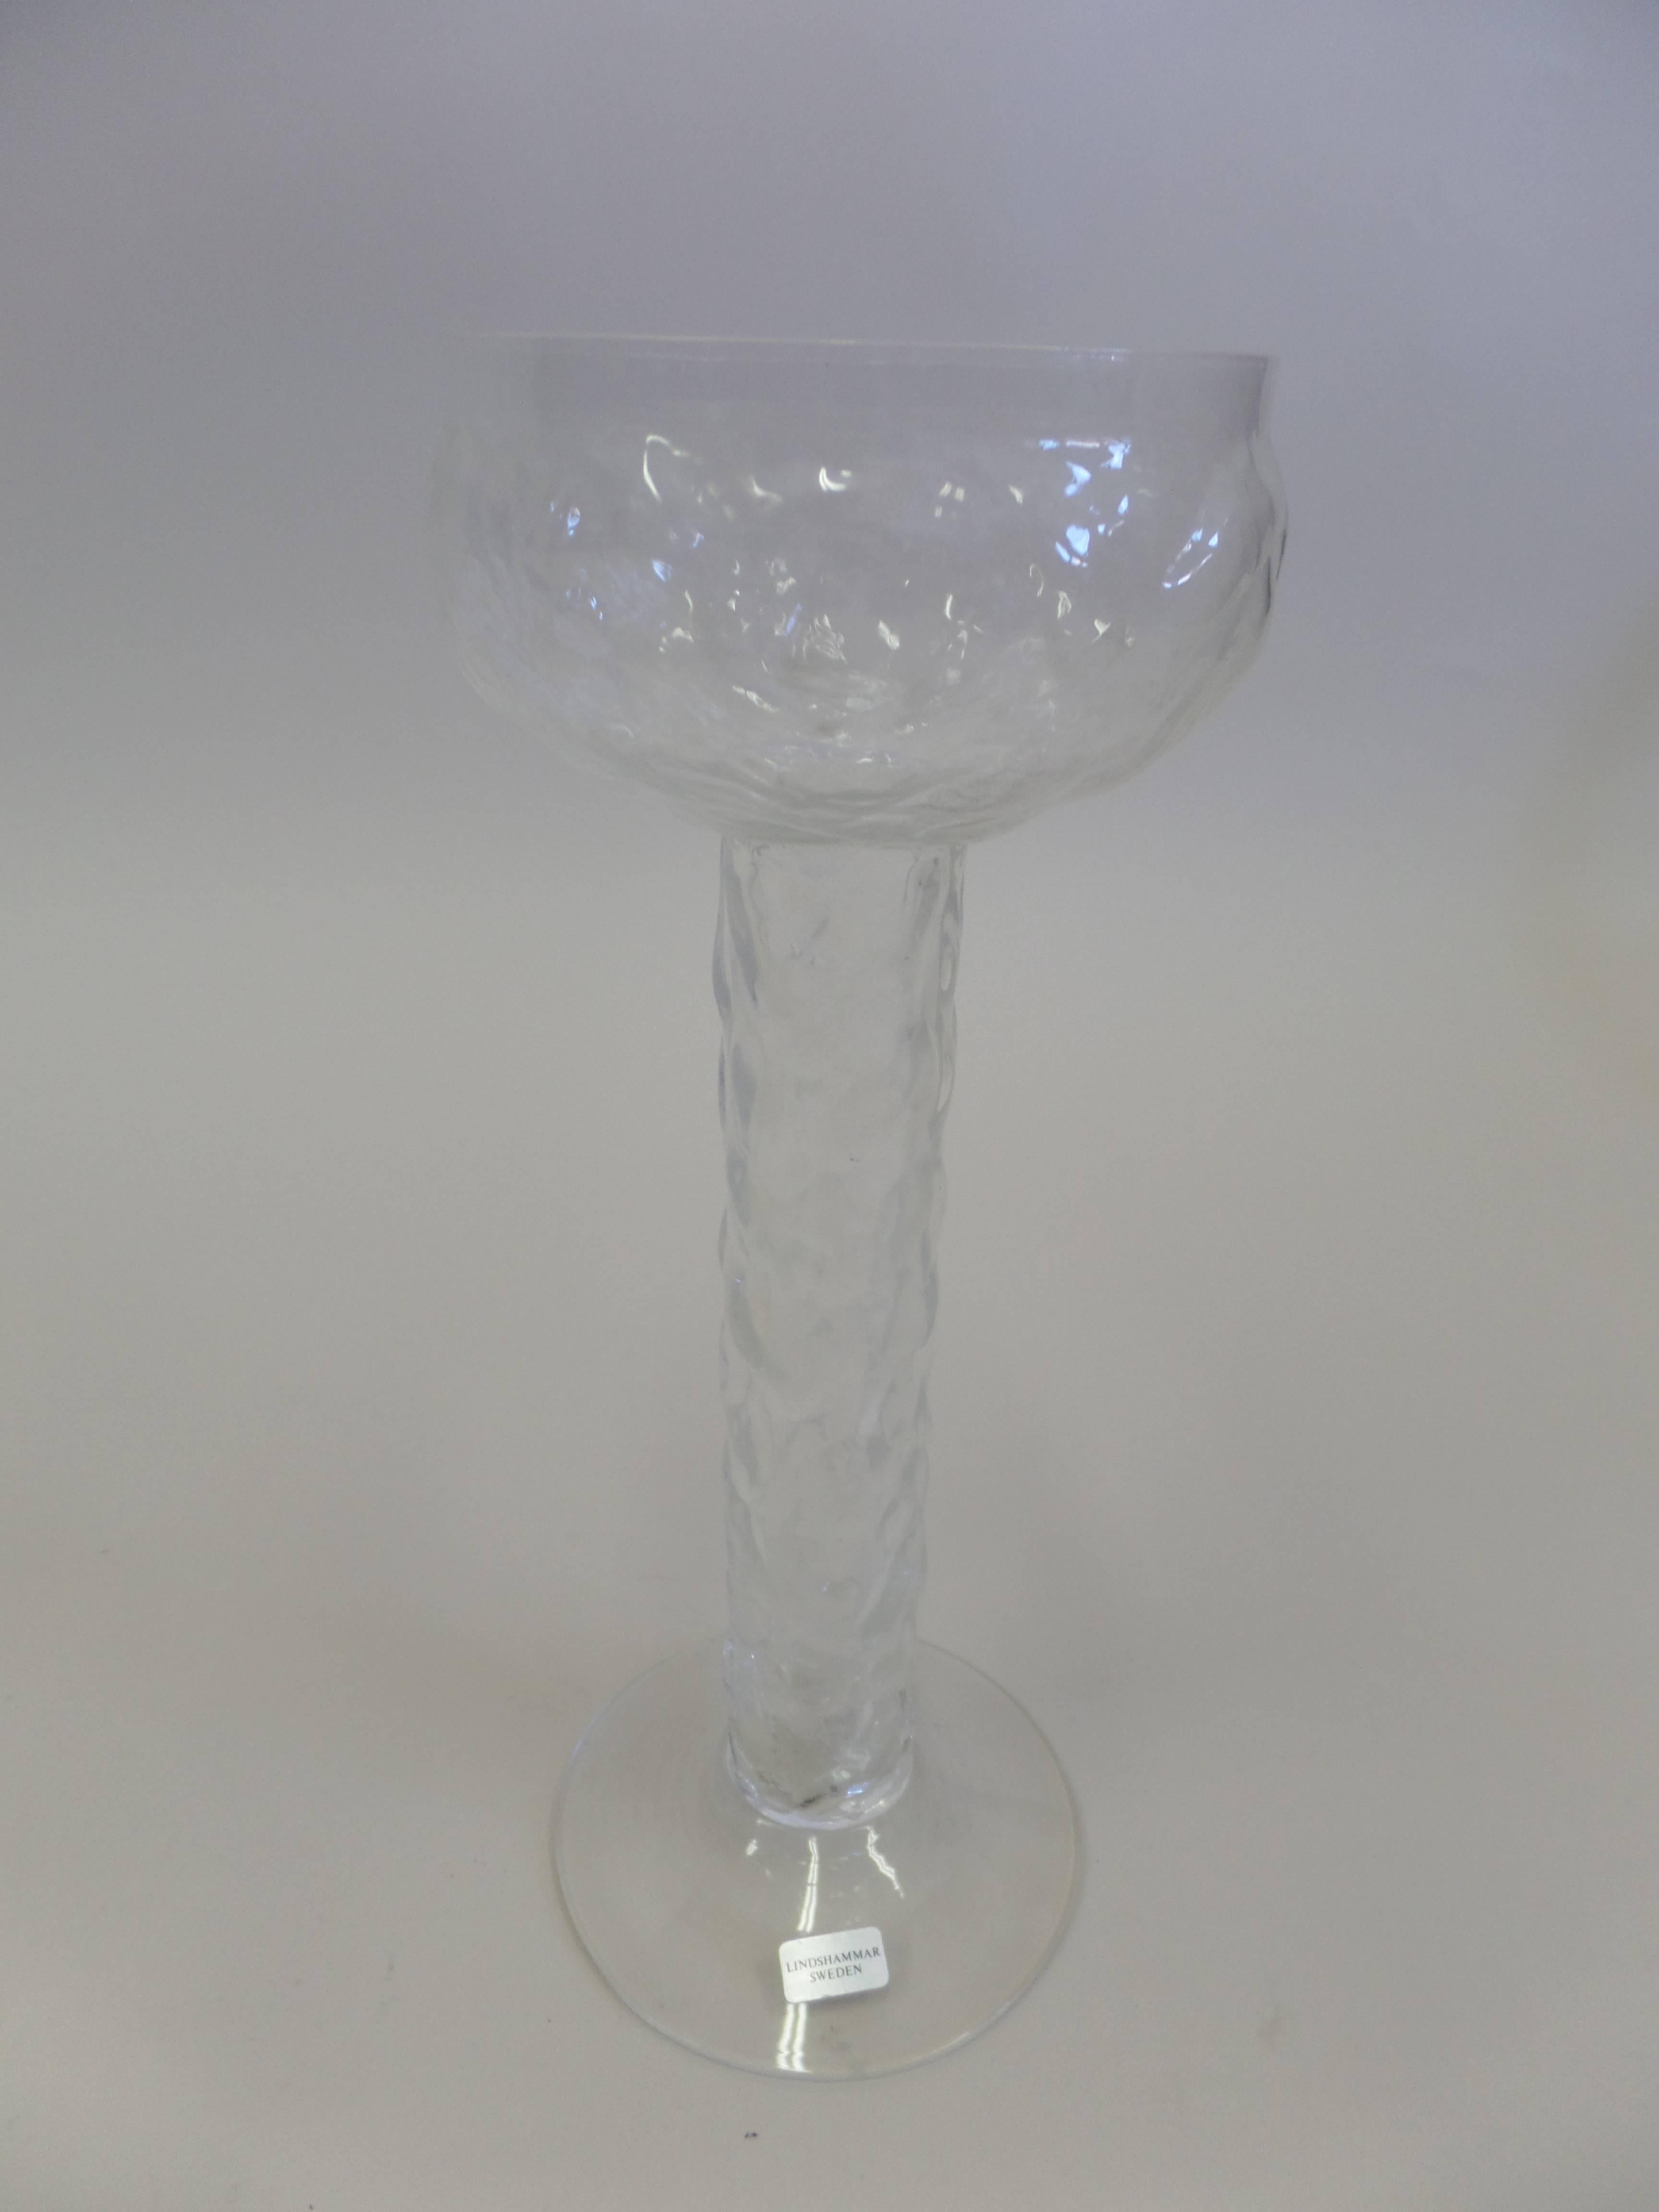 lindshammar glass